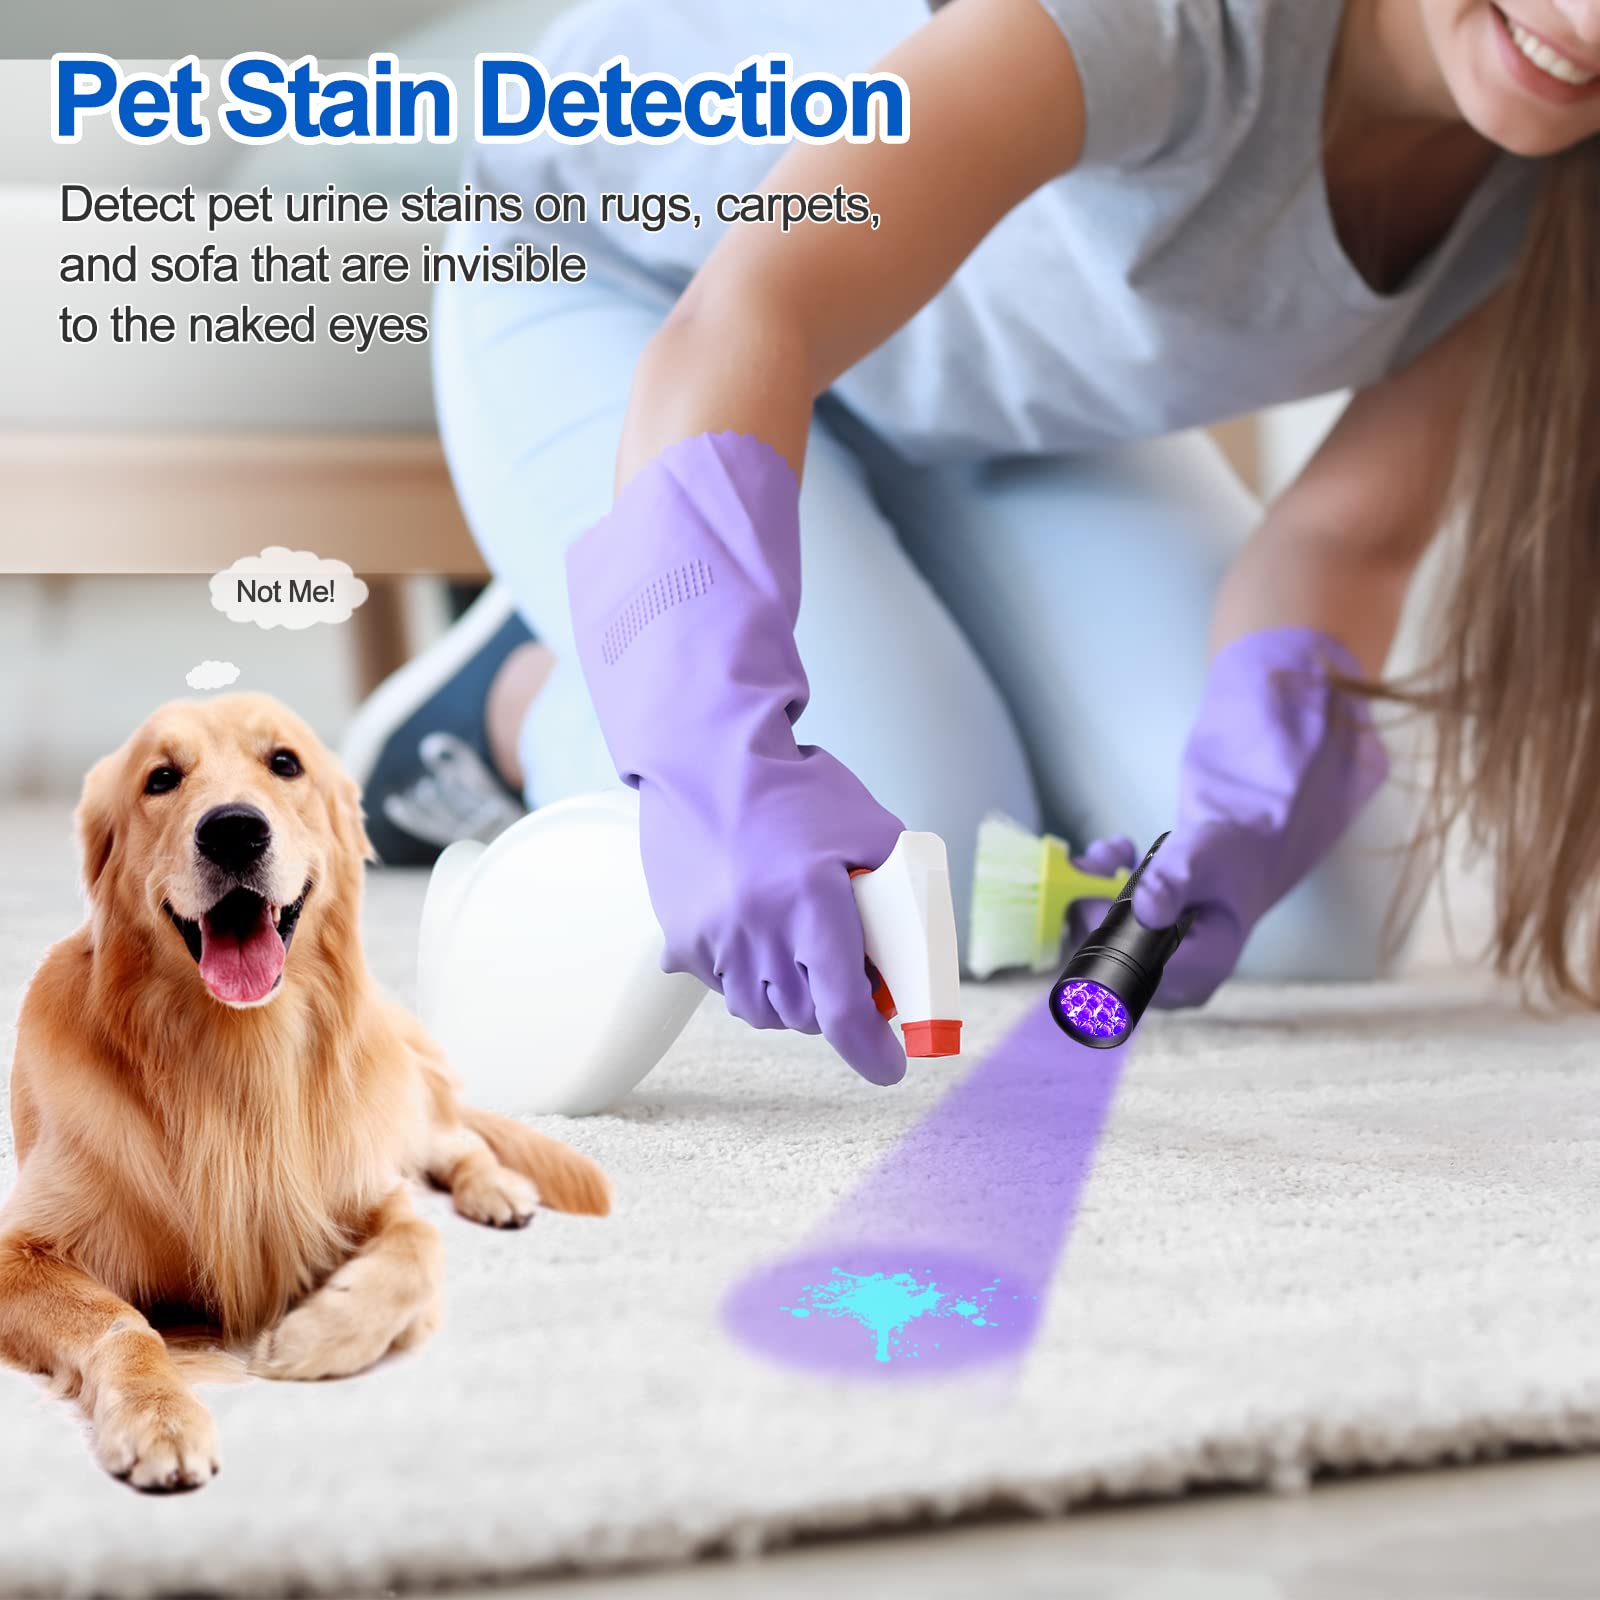 Vansky 【Recommend】 365nm and 12 LED 395nm Blacklight UV Flashlight Pet Urine Detector for Dog/Cat Urine, Dry Stains